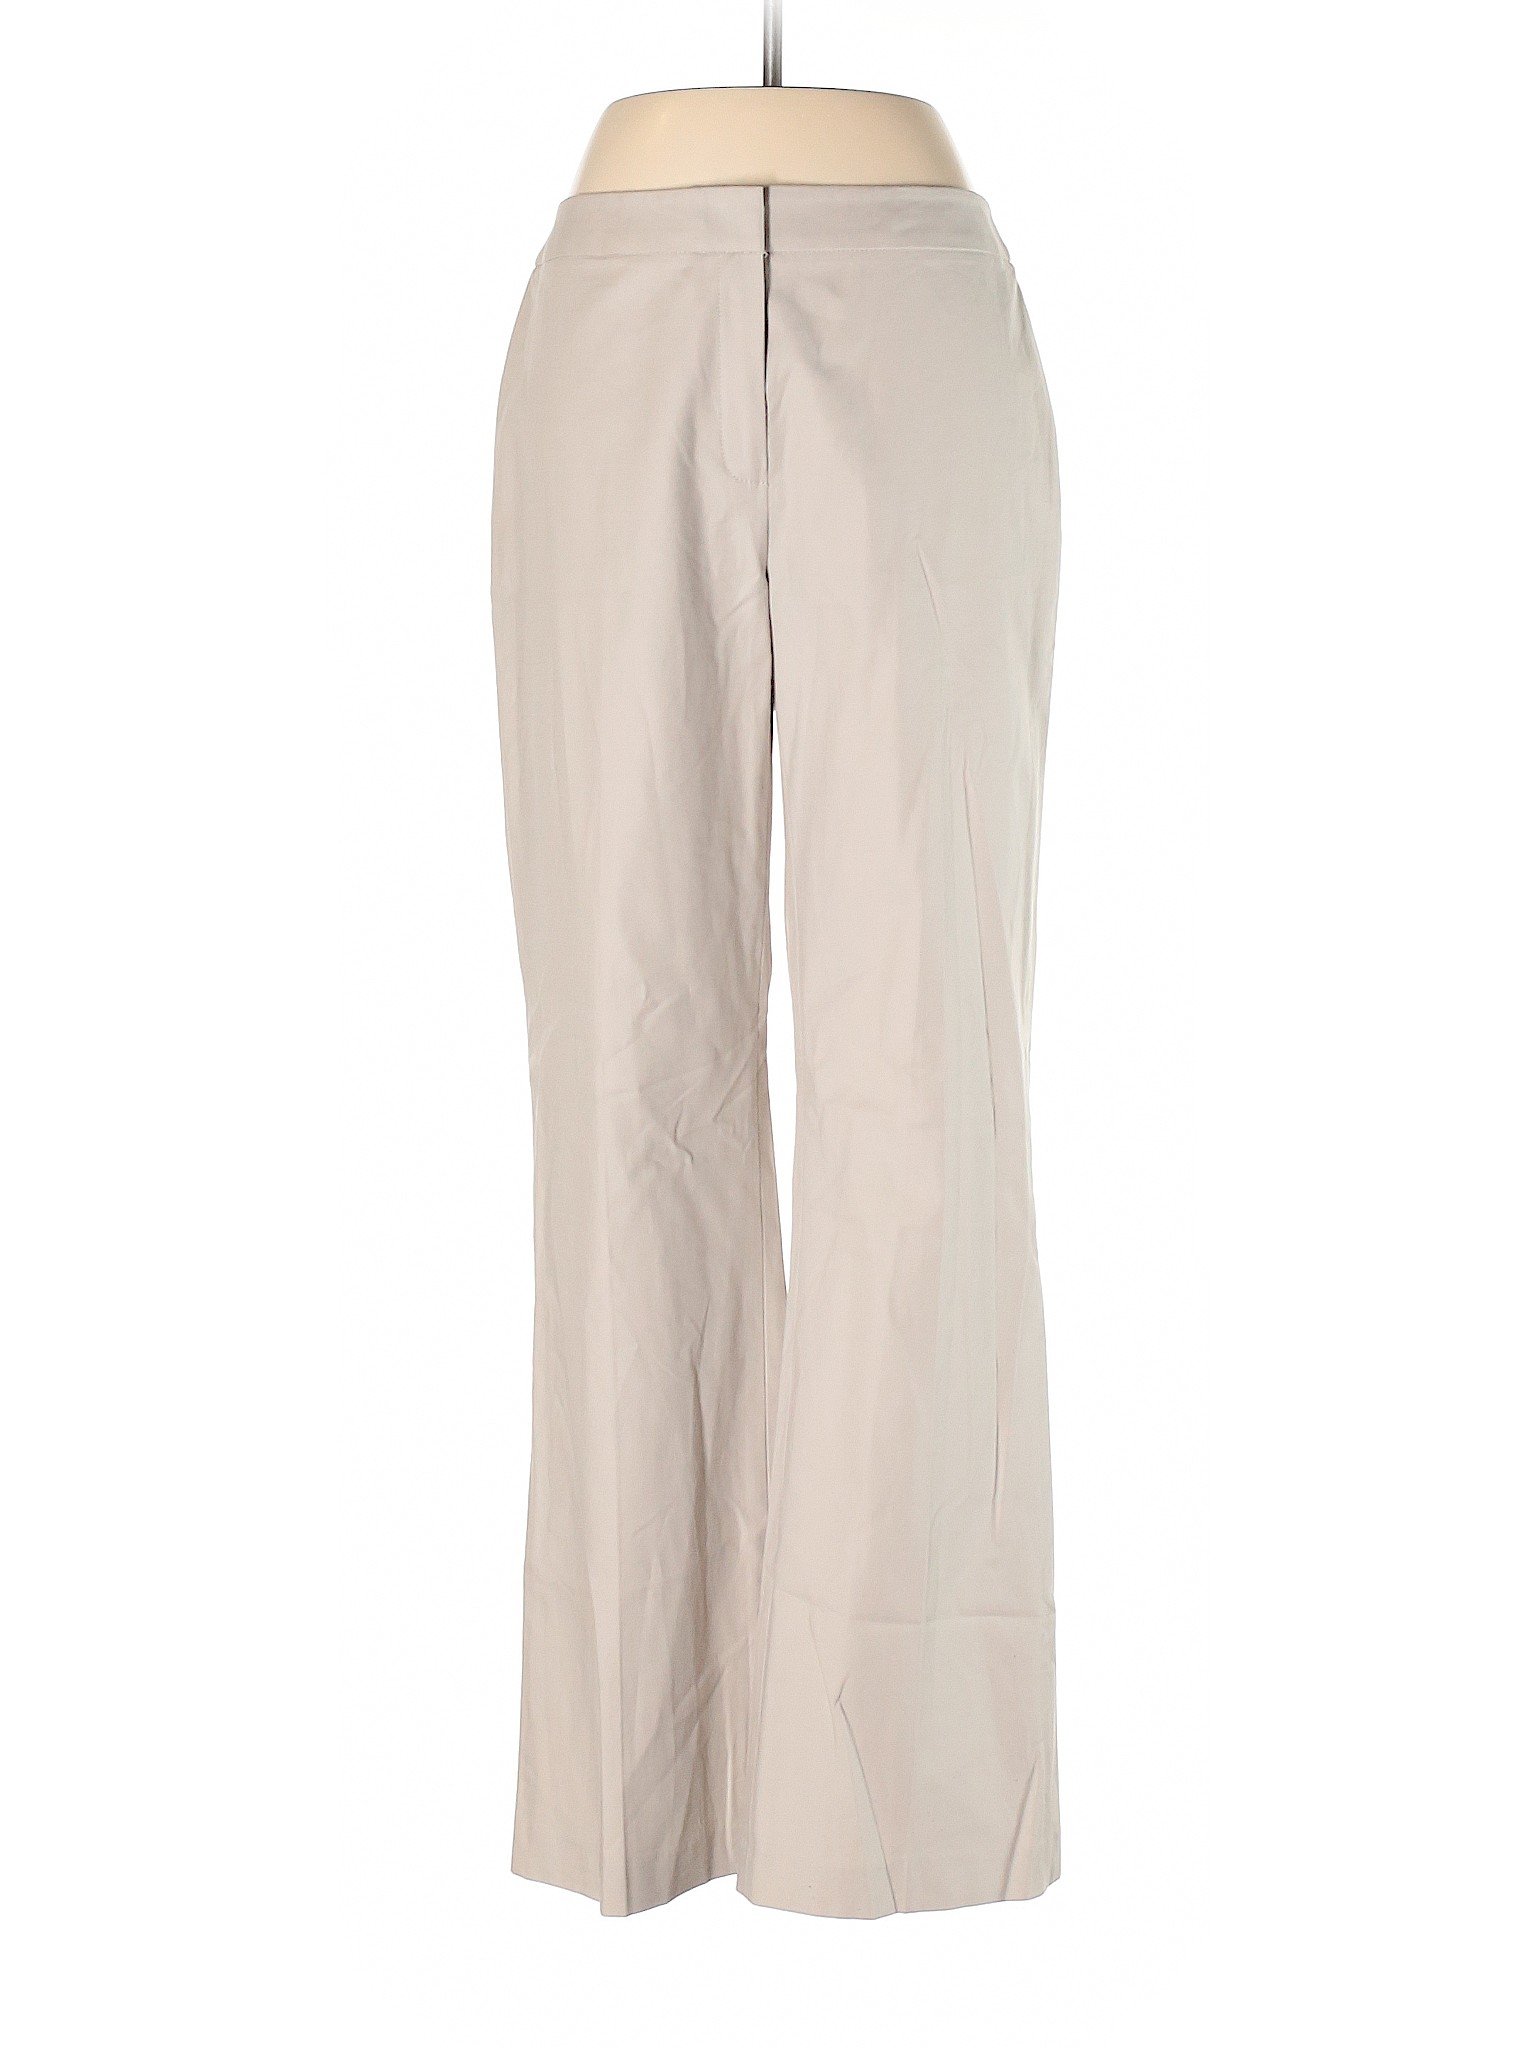 Lafayette 148 New York Women Brown Dress Pants 6 | eBay